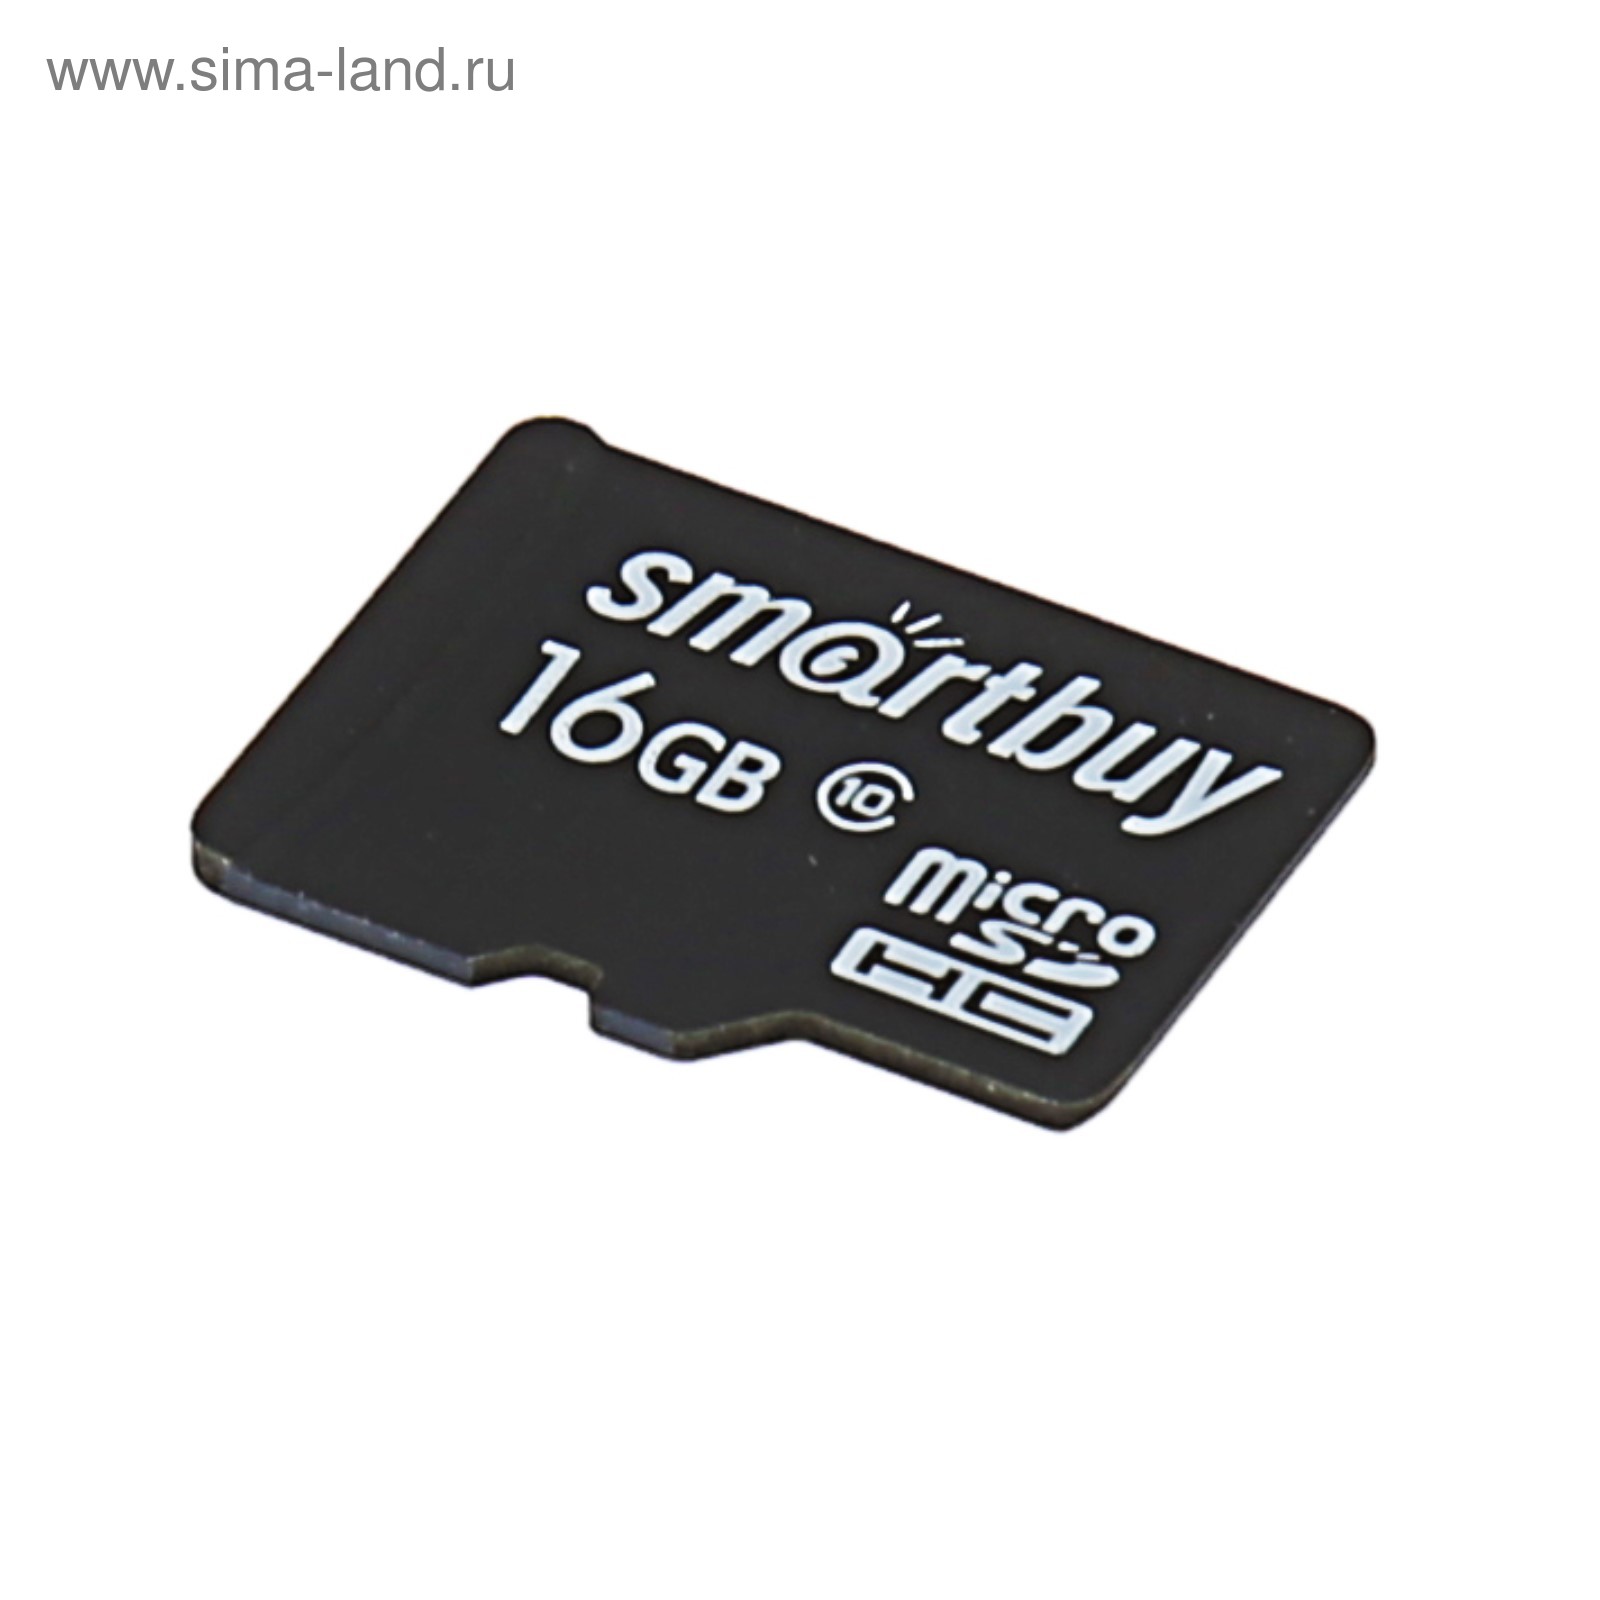 Флешка микро сд цена. Карта памяти SMARTBUY MICROSDHC class 10 16gb. Карта флэш-памяти MICROSD 16 ГБ Smart buy +SD адаптер (class 10) le. Микро СД SMARTBUY 16gb. SMARTBUY флешка 16 микро СД.